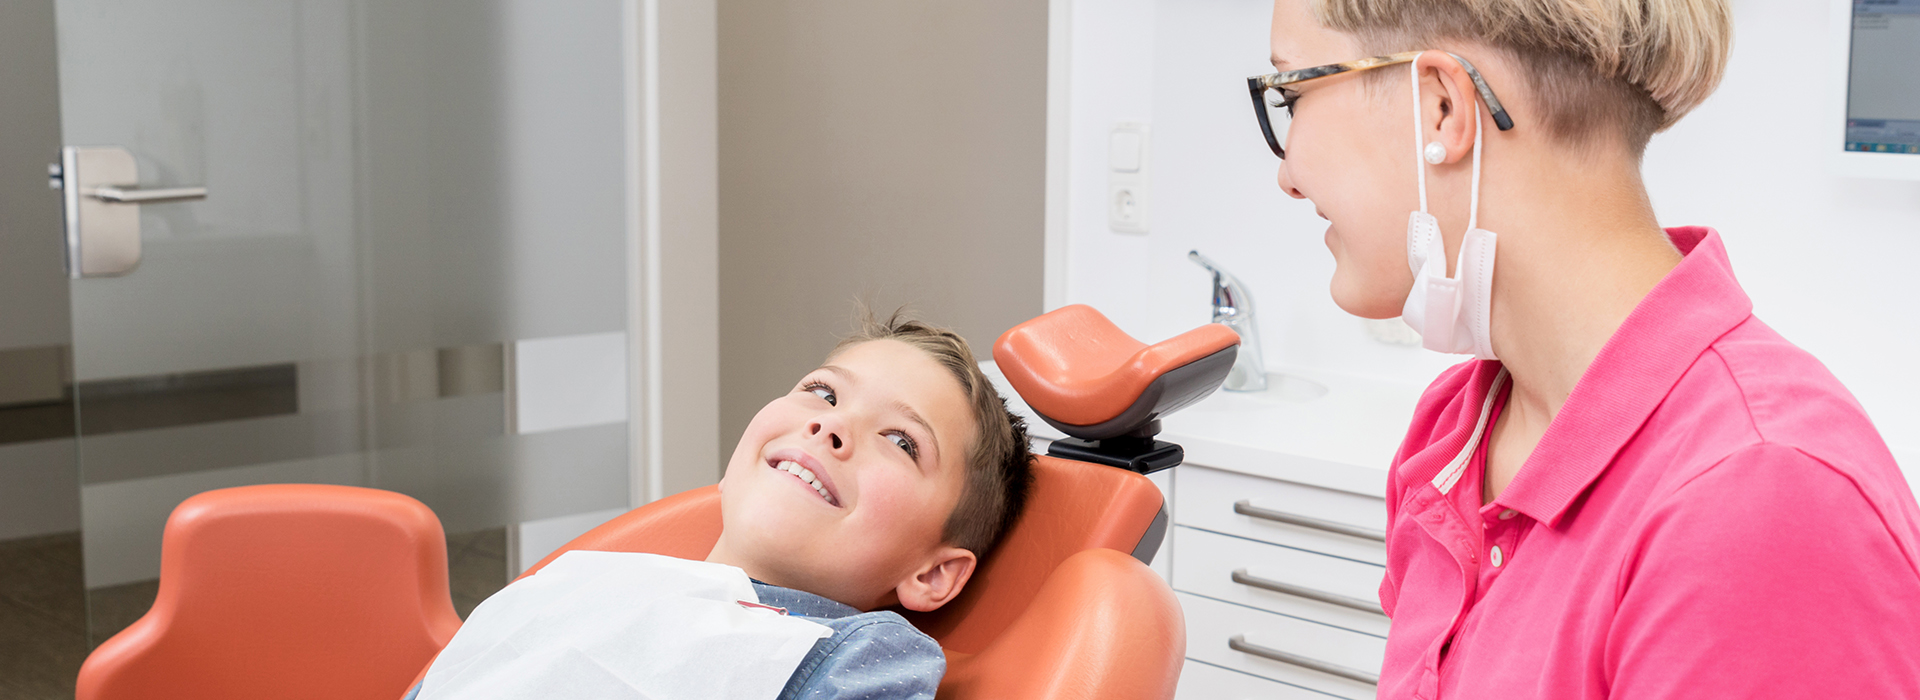 Astoria Modern Family Dental | Preventative Program, Oral Exams and Invisalign reg 